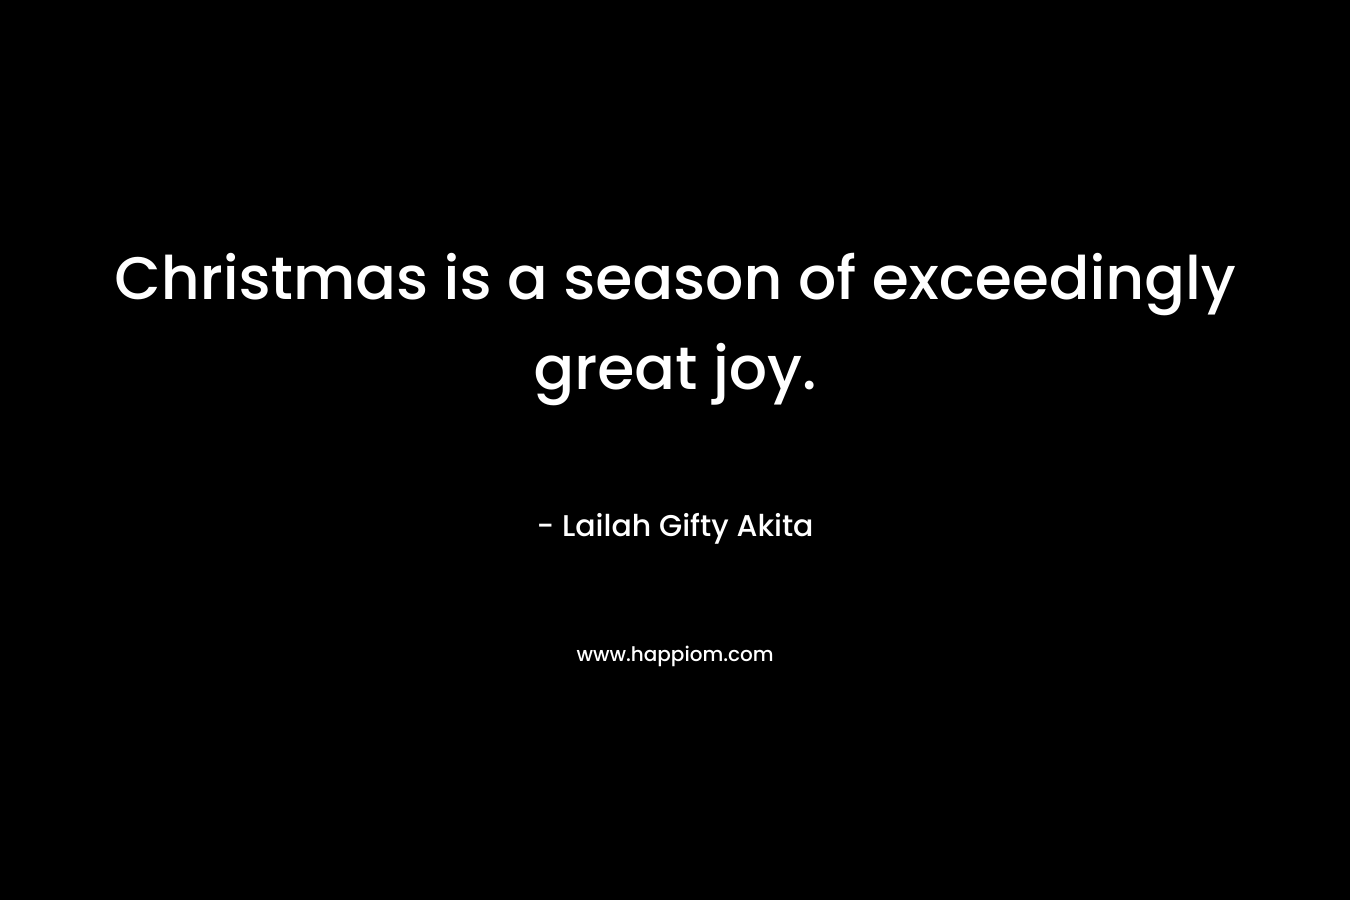 Christmas is a season of exceedingly great joy.